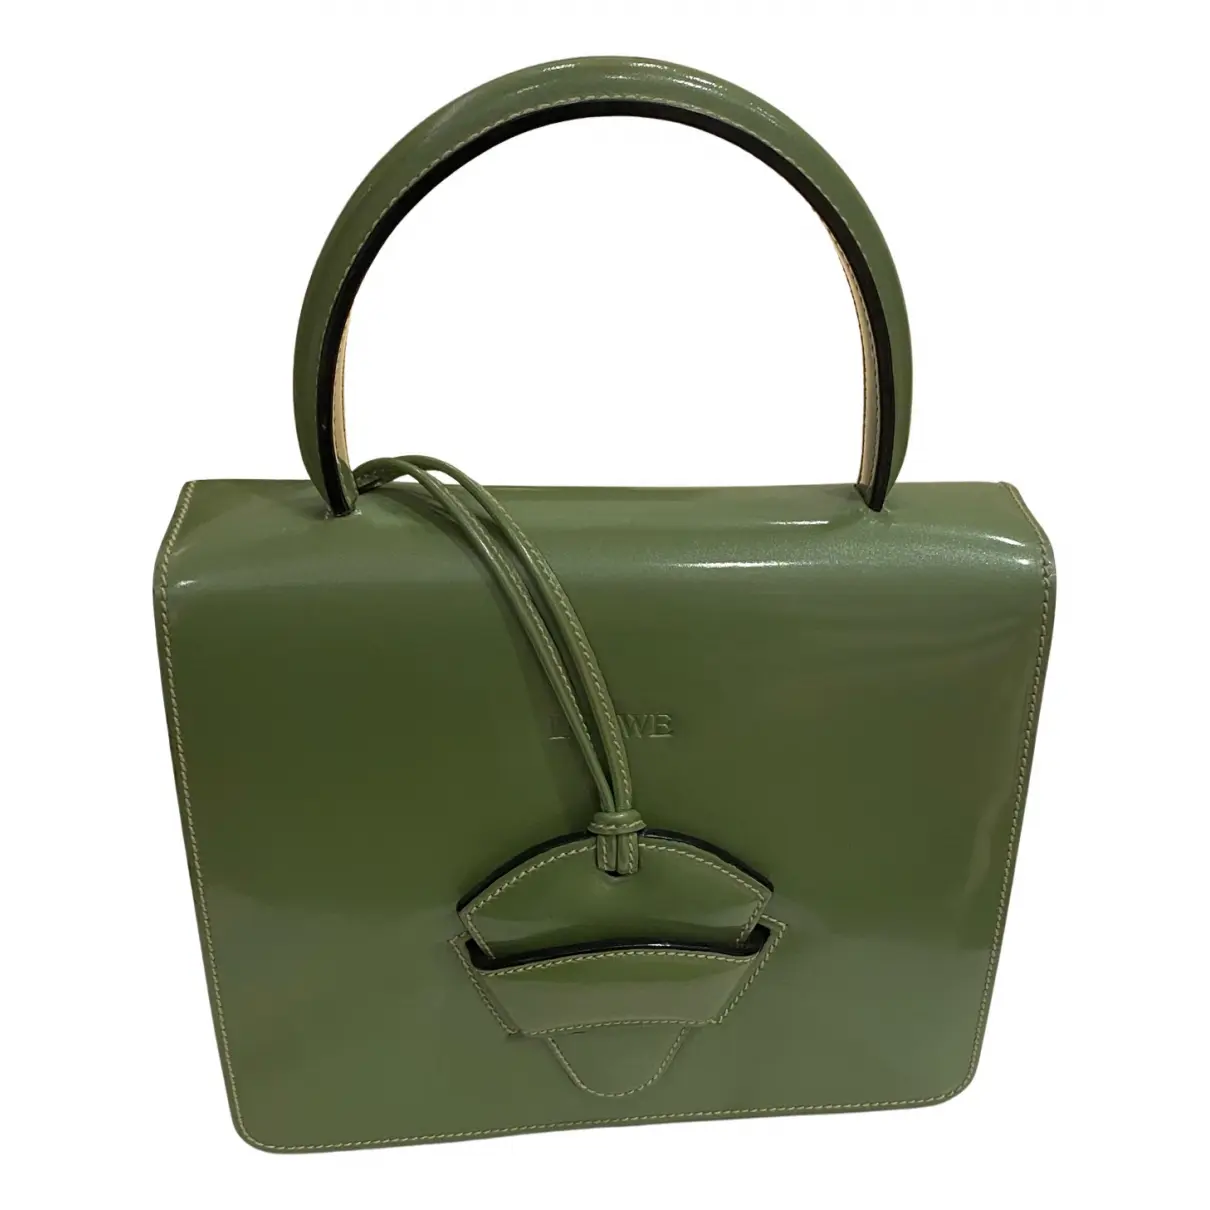 Barcelona leather handbag Loewe - Vintage